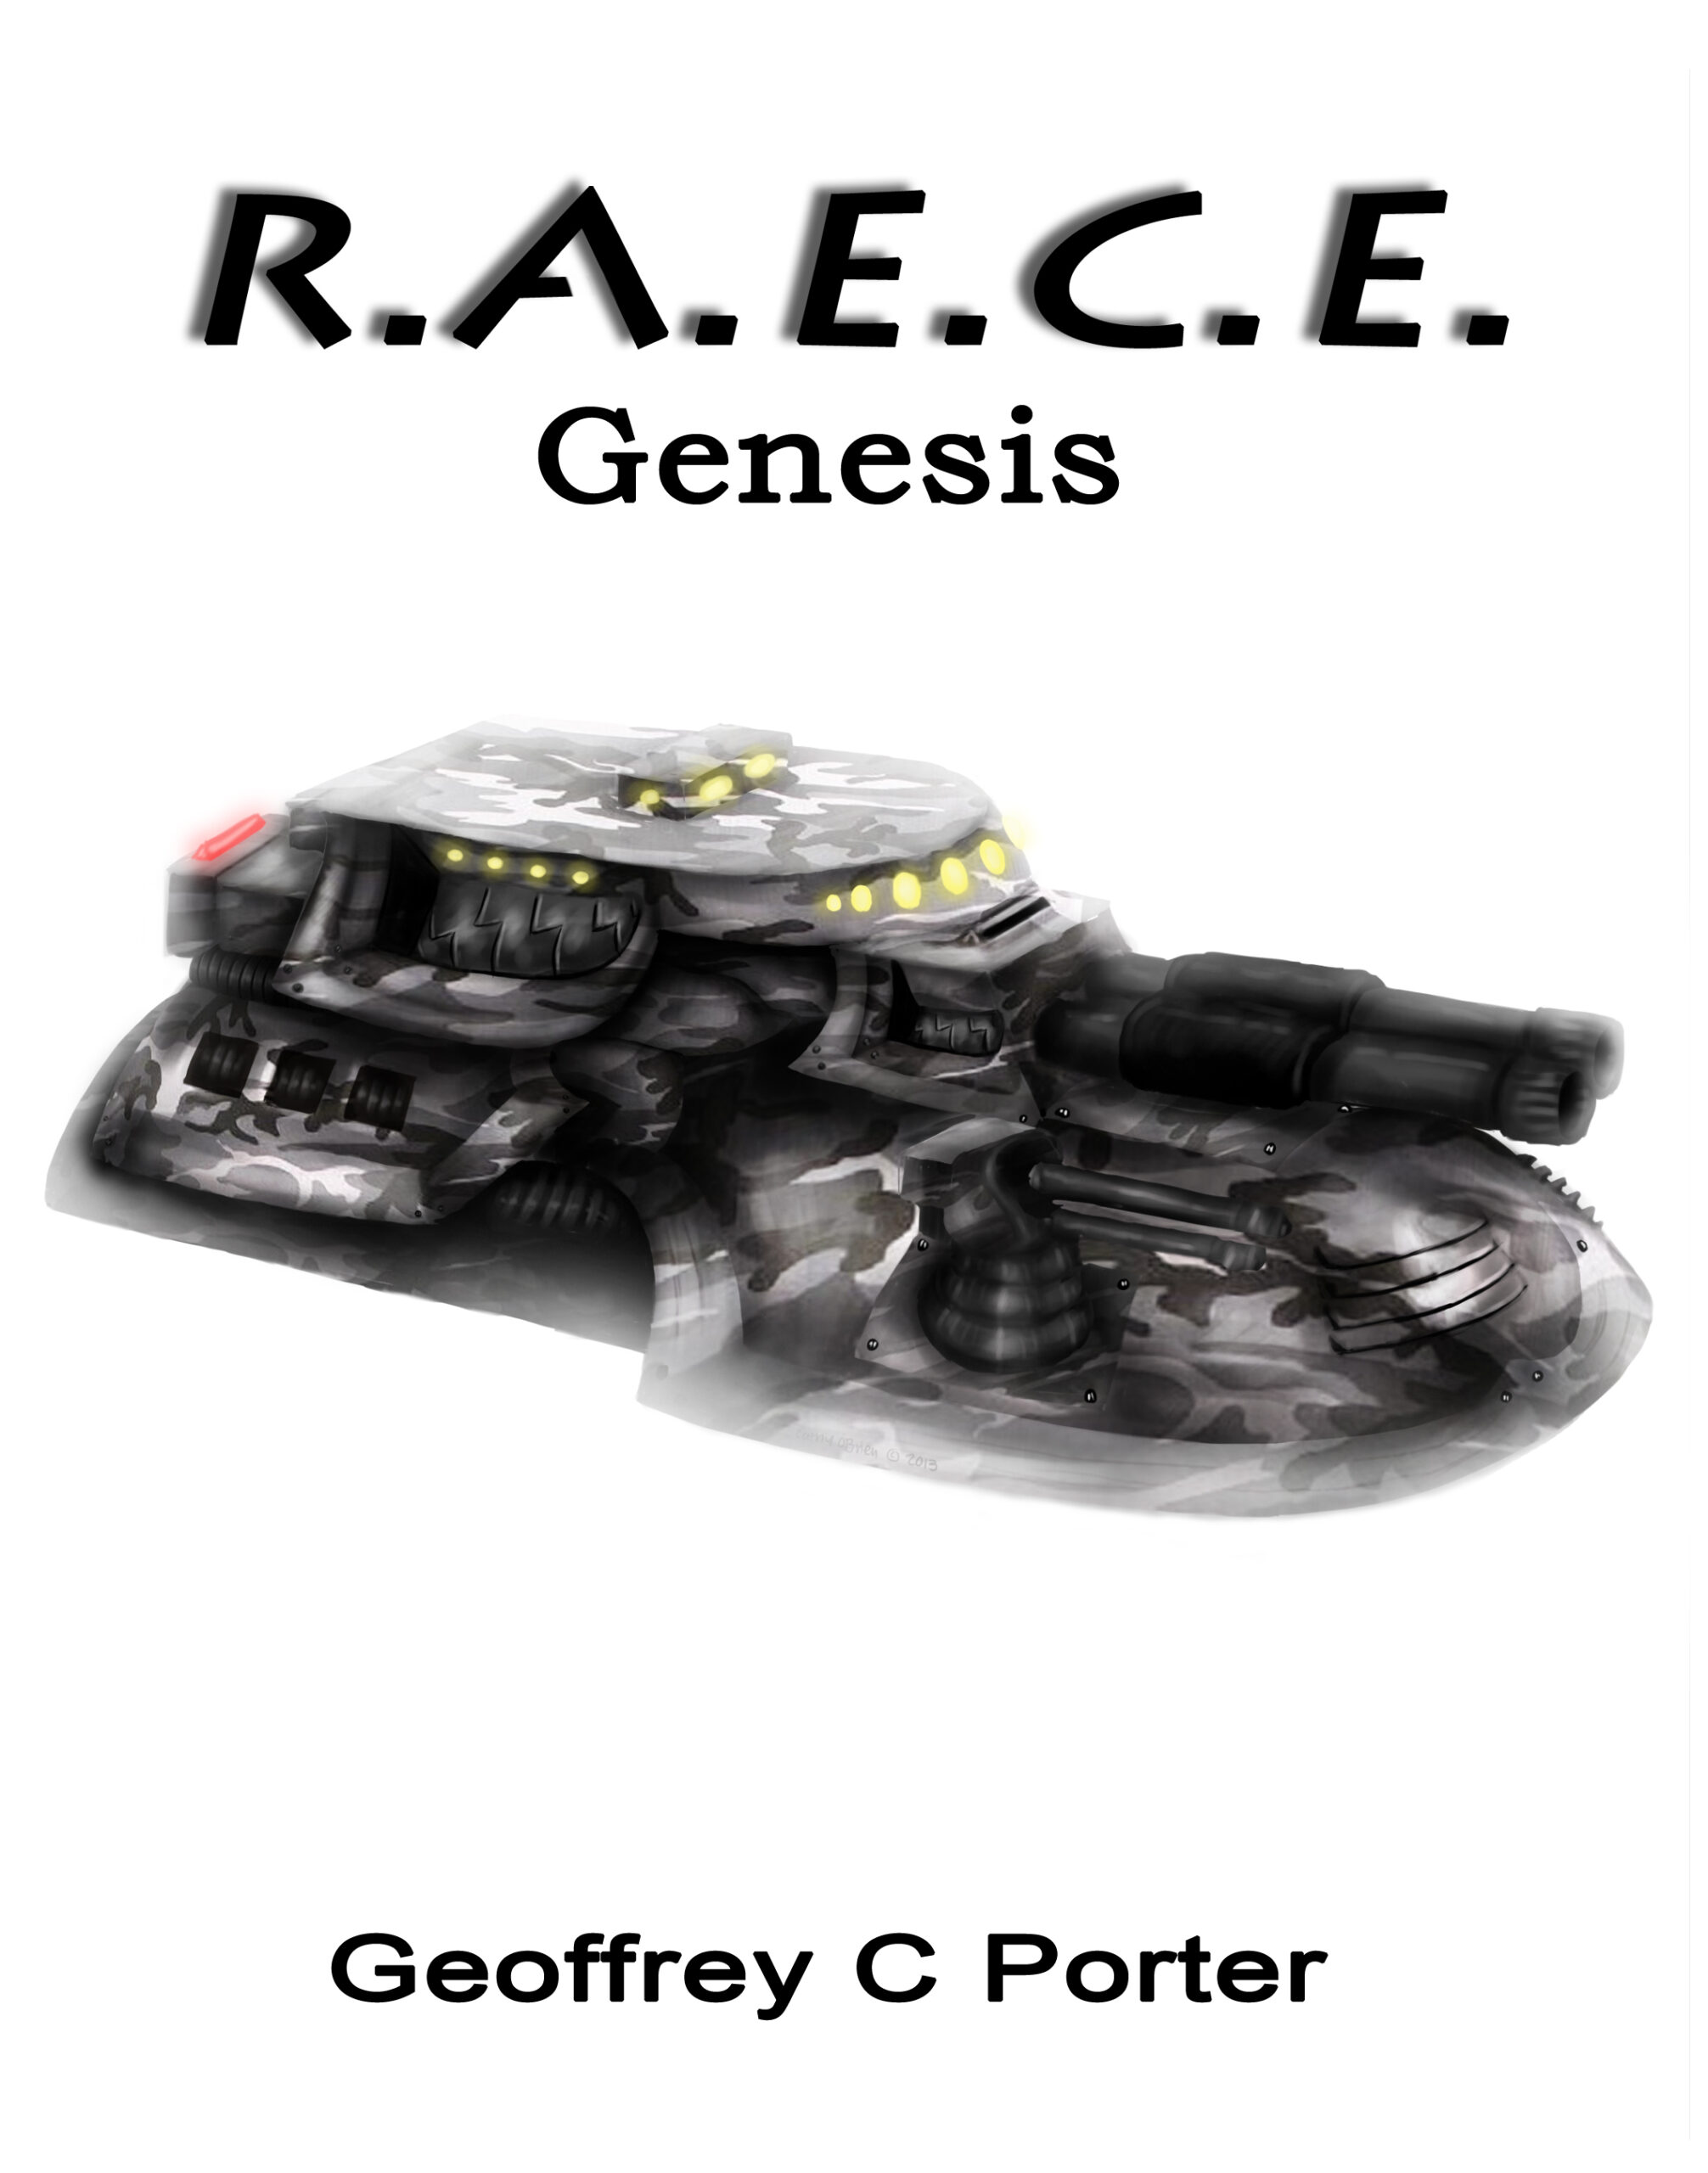 FREE: R.A.E.C.E. Genesis by Geoffrey C Porter